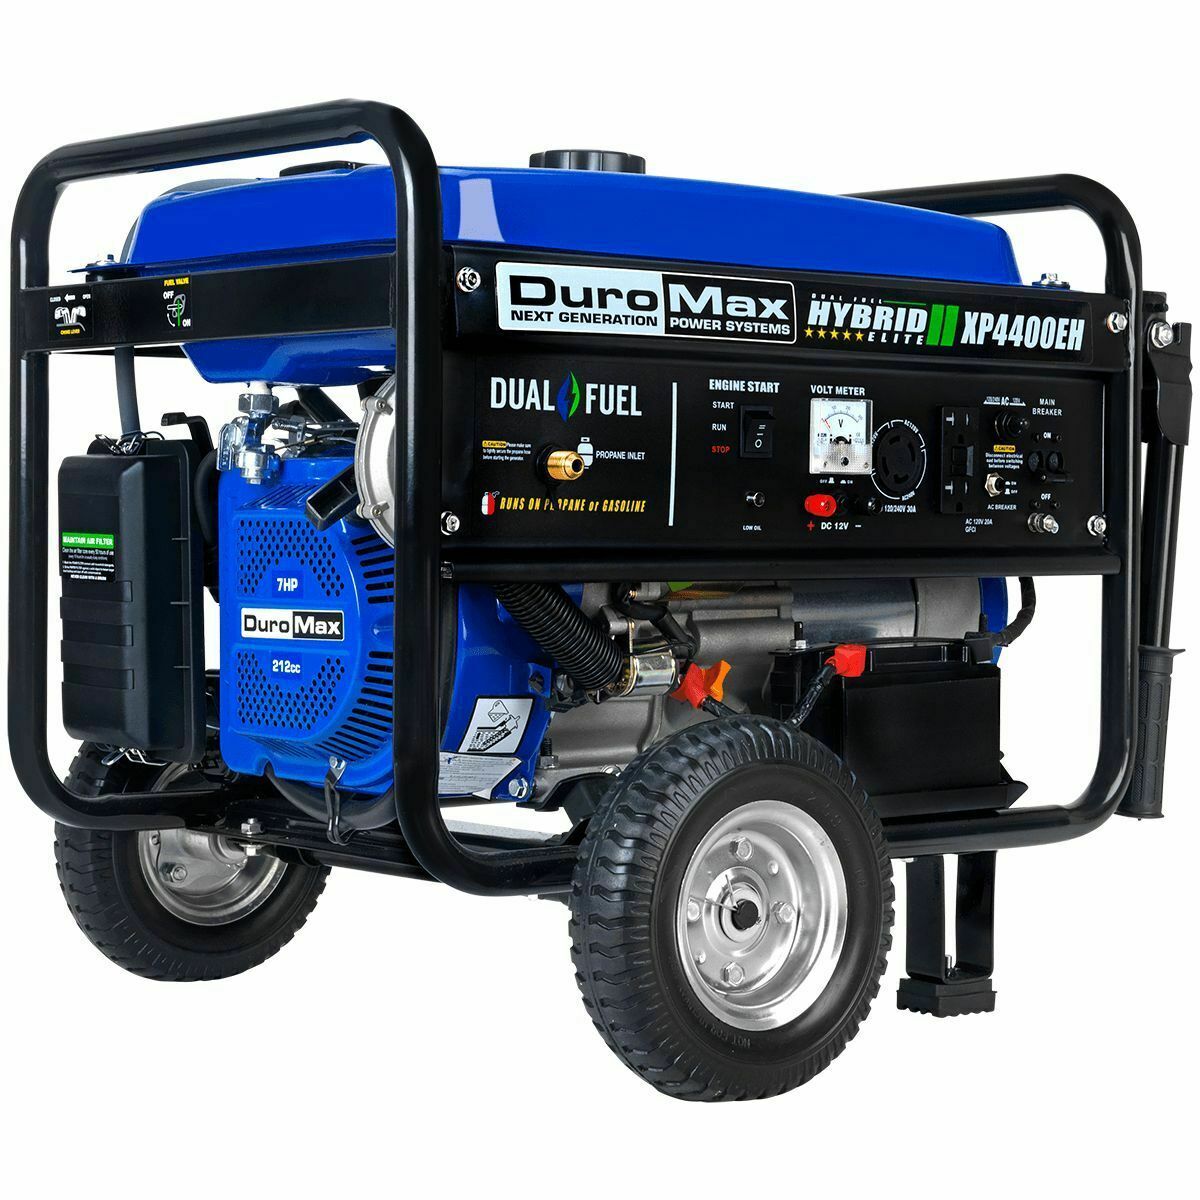 DuroMax XP4400EH 4,400 Watt Portable Dual Fuel Gas Propane Generator